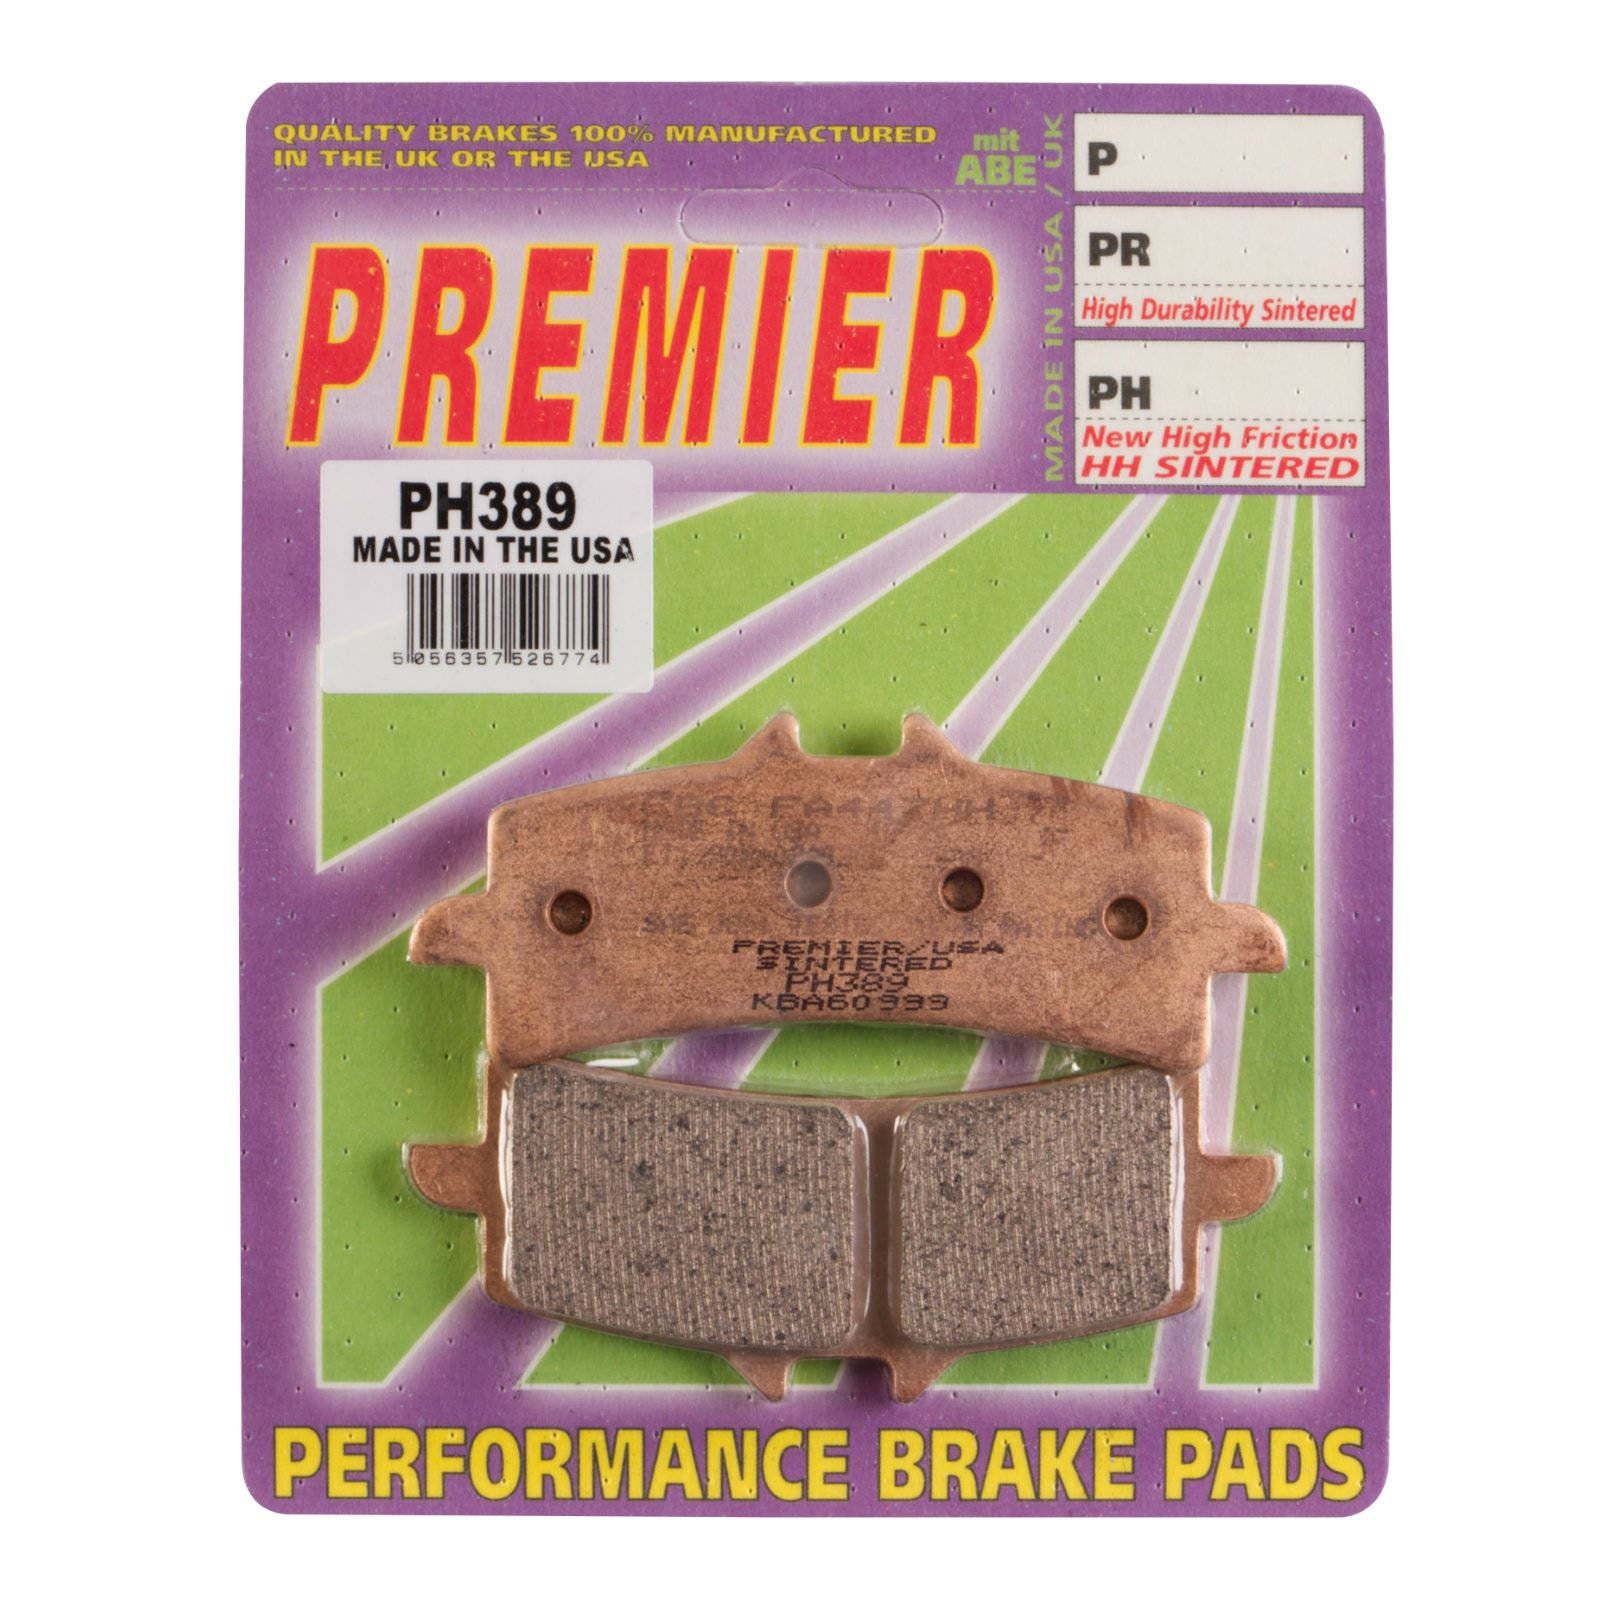 New PREMIER Brake Pad - PH Street Sintered (GF258S3) #PBPH389